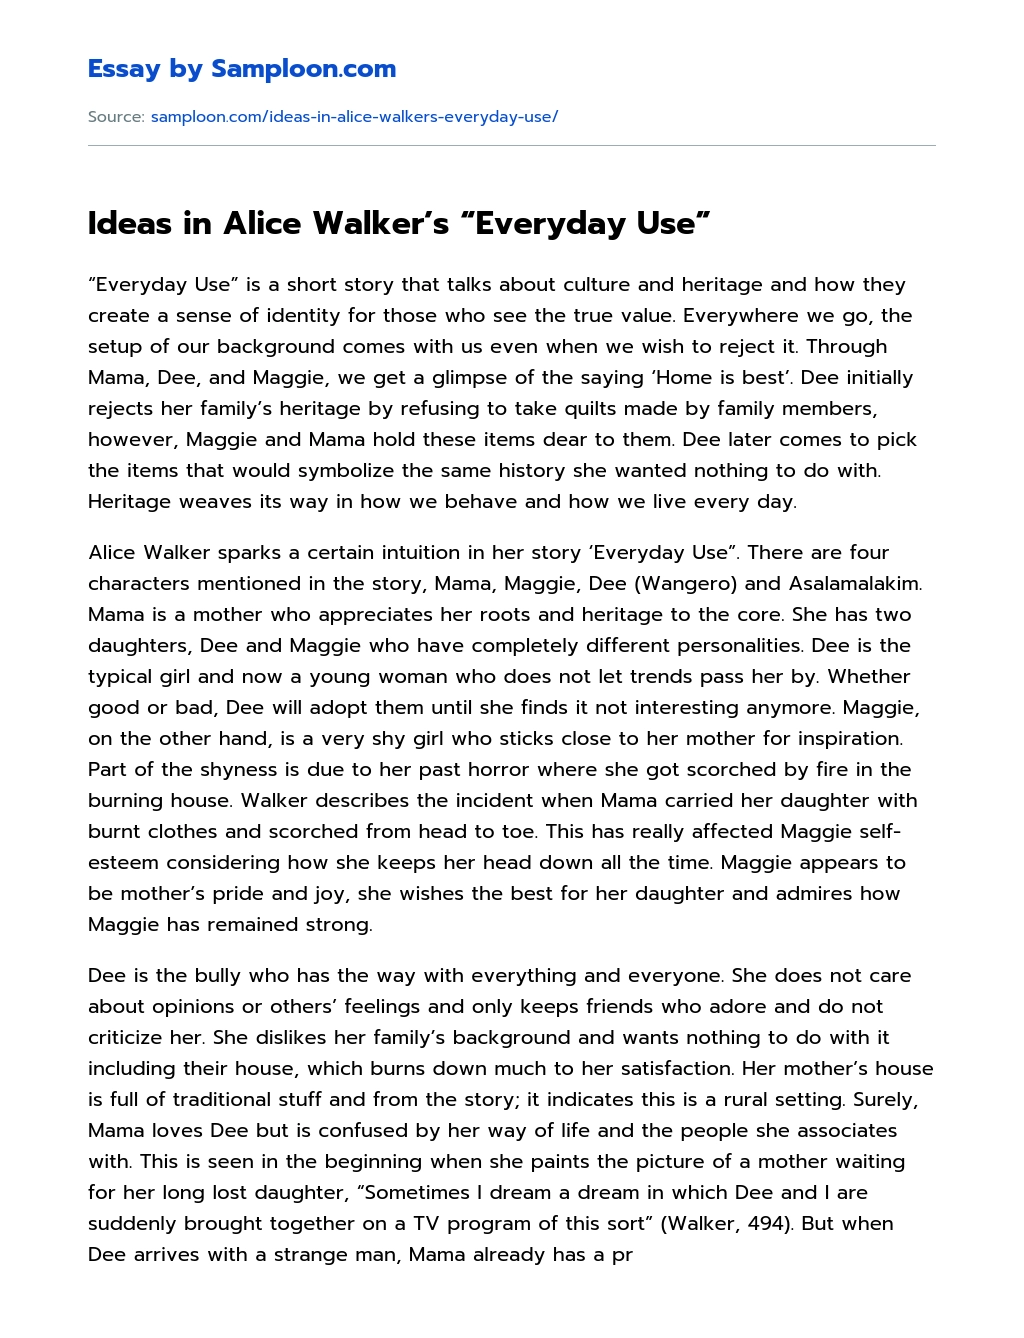 Ideas in Alice Walker’s “Everyday Use” essay